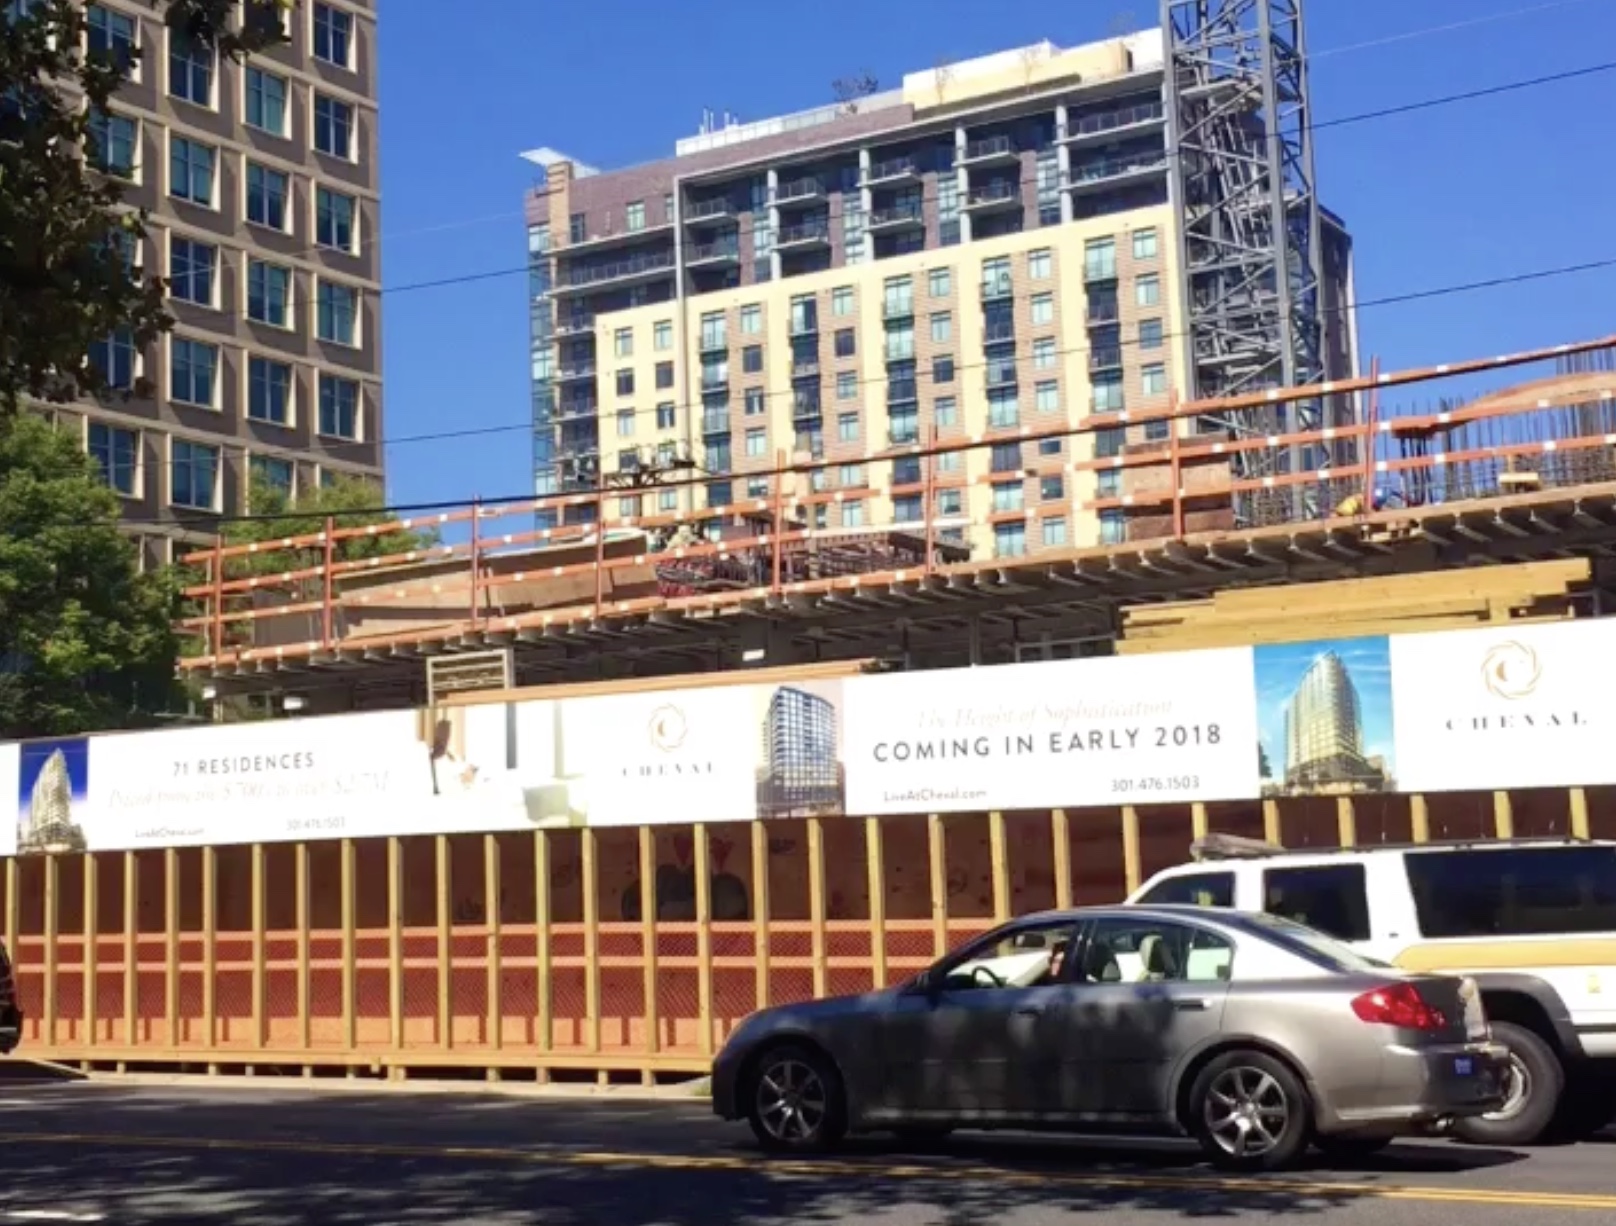 The Cheval Condominiums - Construction